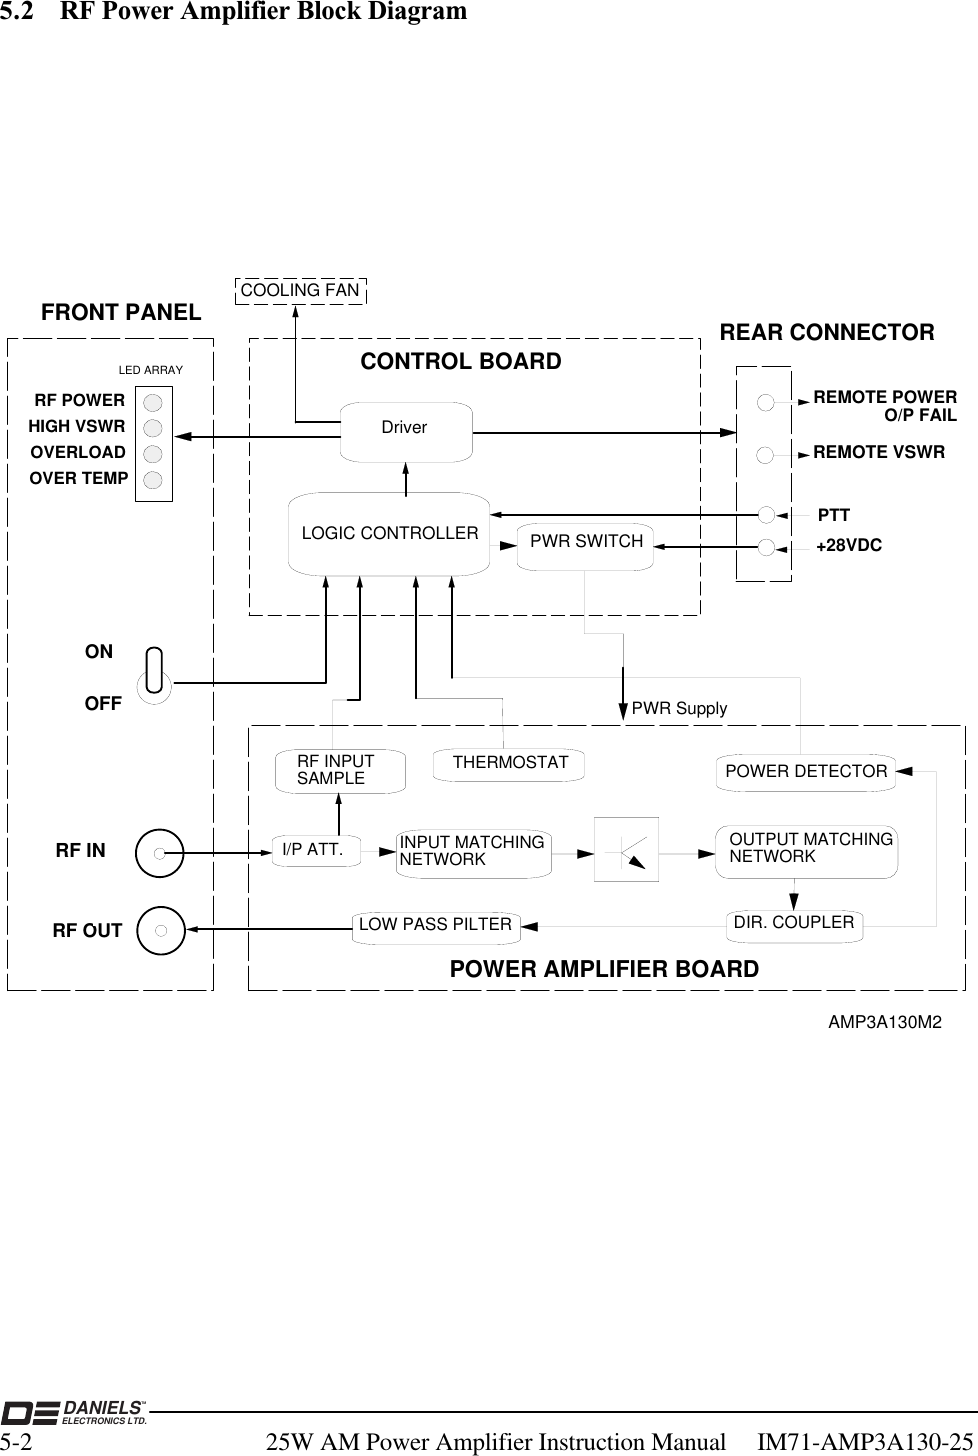 DANIELSELECTRONICS LTD.TM5-2 25W AM Power Amplifier Instruction Manual     IM71-AMP3A130-255.2 RF Power Amplifier Block DiagramPOWER AMPLIFIER BOARDRF INPUT SAMPLEREAR CONNECTORLOGIC CONTROLLERDriverPWR SWITCHCONTROL BOARD+28VDCI/P ATT.RF POWEROVER TEMPOVERLOADHIGH VSWRLED ARRAYRF INPWR SupplyFRONT PANELPTT   REMOTE POWERO/P FAILRF OUT DIR. COUPLERPOWER DETECTOROUTPUT MATCHINGNETWORKINPUT MATCHINGNETWORKLOW PASS PILTEROFFON REMOTE VSWRCOOLING FANTHERMOSTATAMP3A130M2